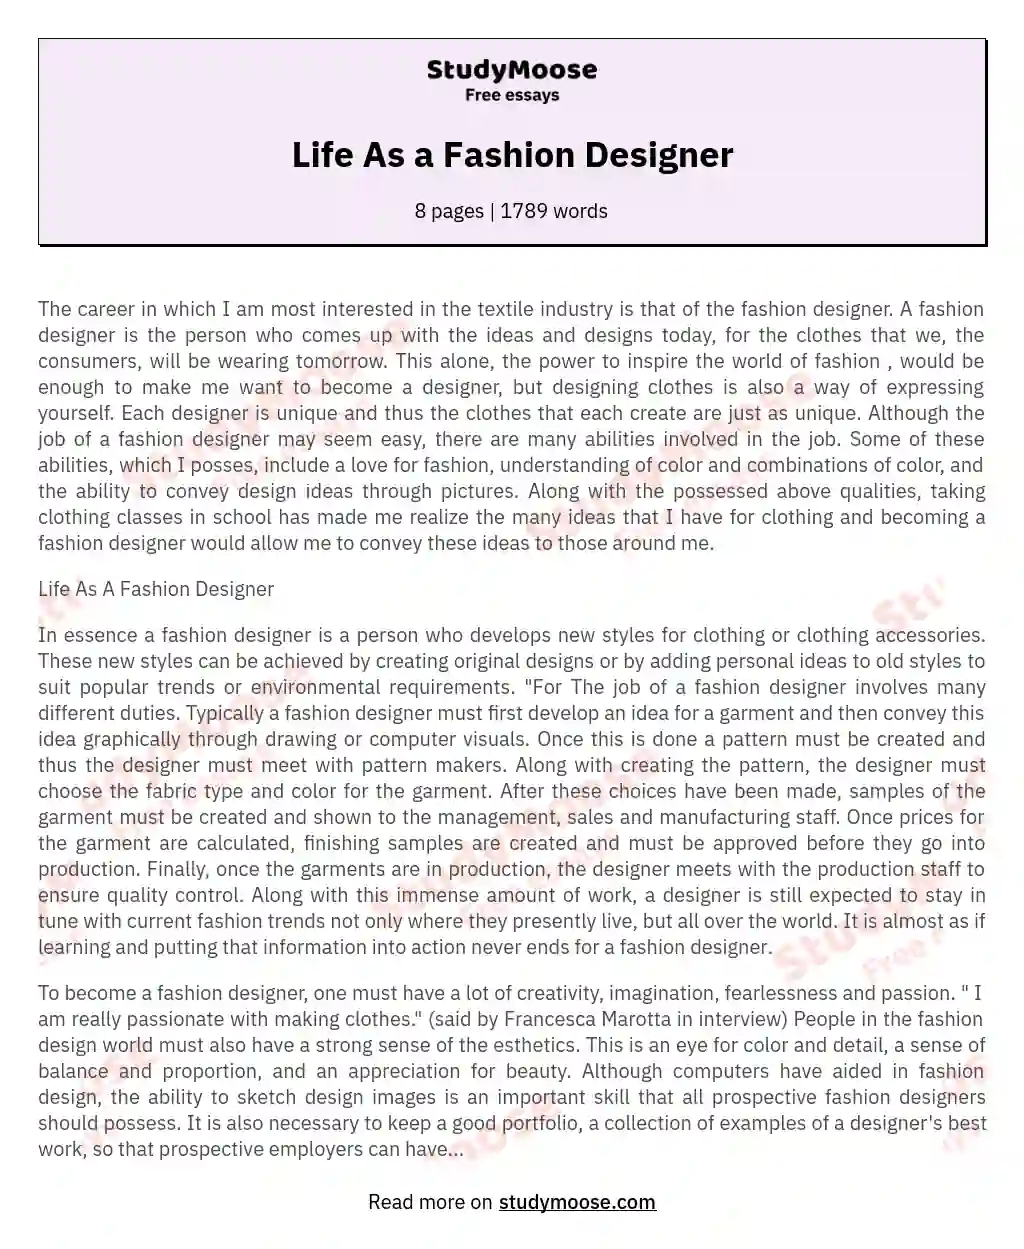 Life As a Fashion Designer essay